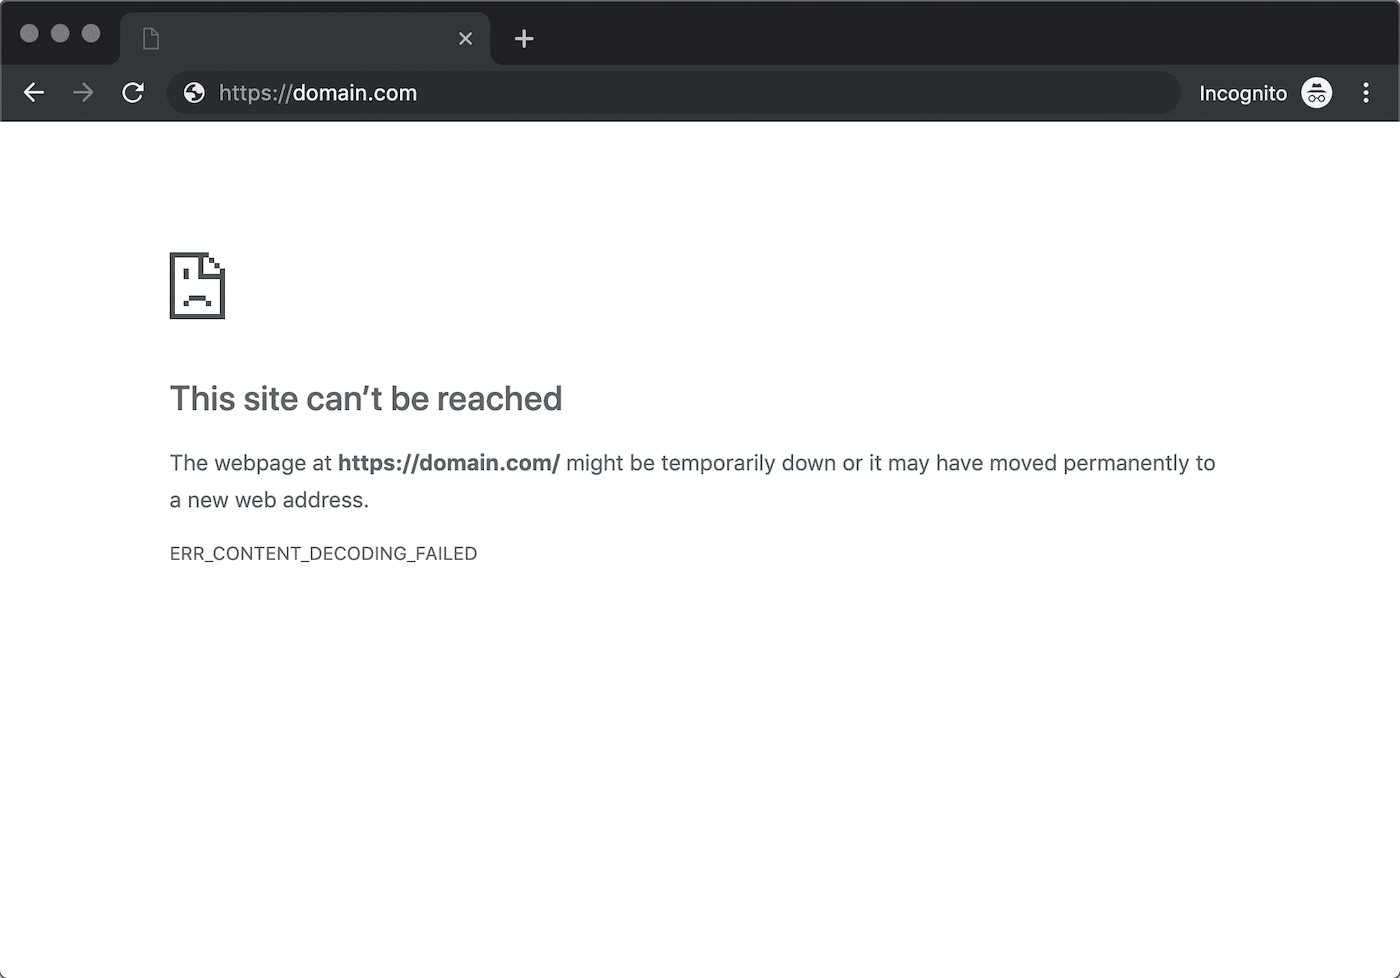 The ERR_CONTENT_DECODING_FAILED error in Google Chrome